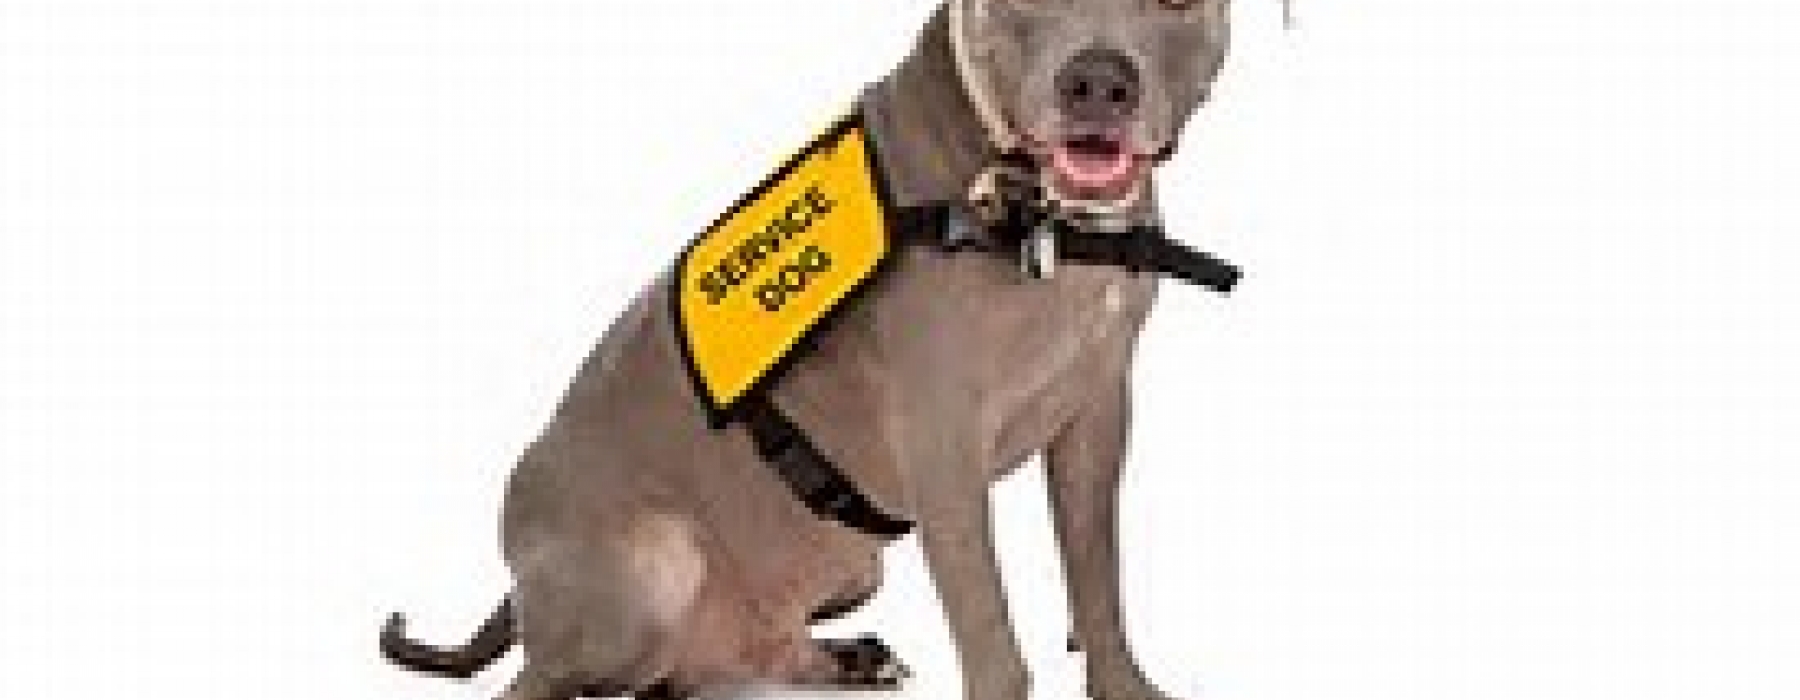 Service Dog Regulations